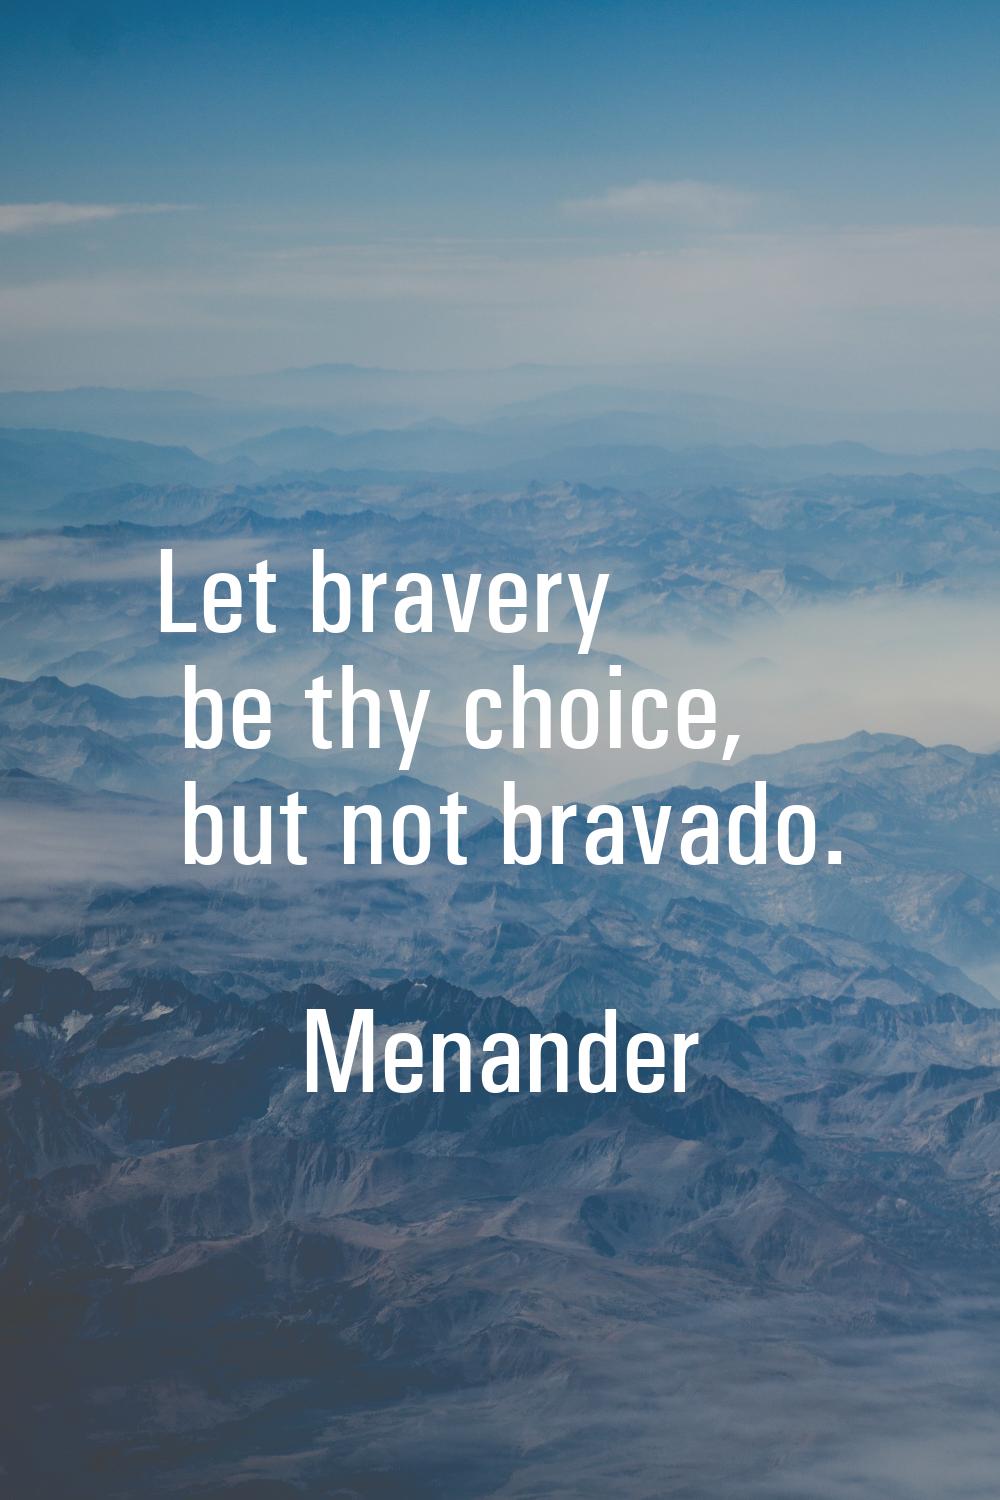 Let bravery be thy choice, but not bravado.